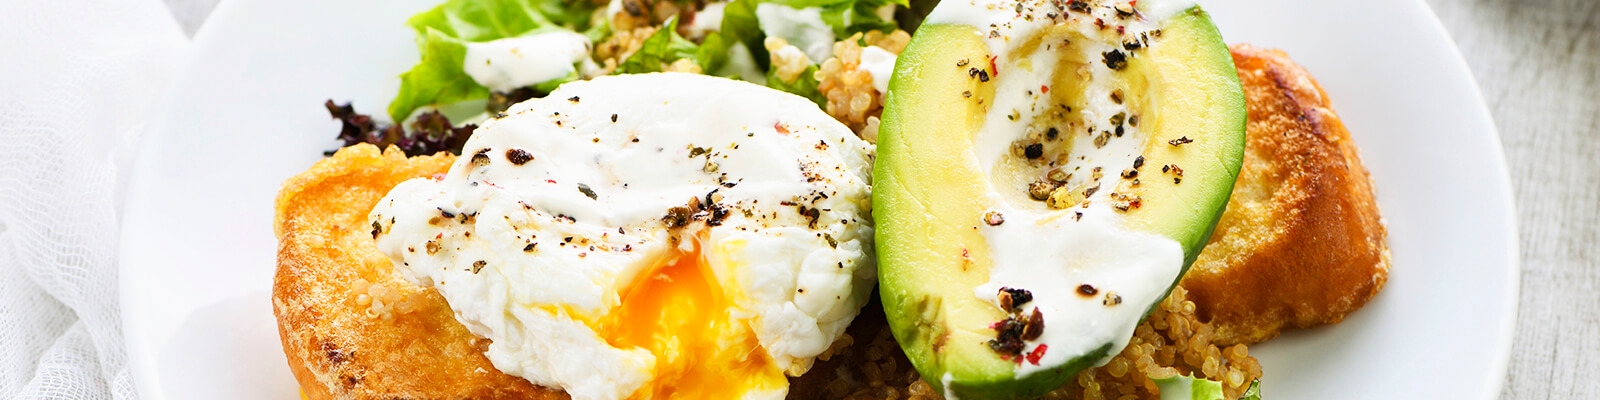 10 Easy Breakfast Ideas for Type 2 Diabetes - Ben's Natural Health